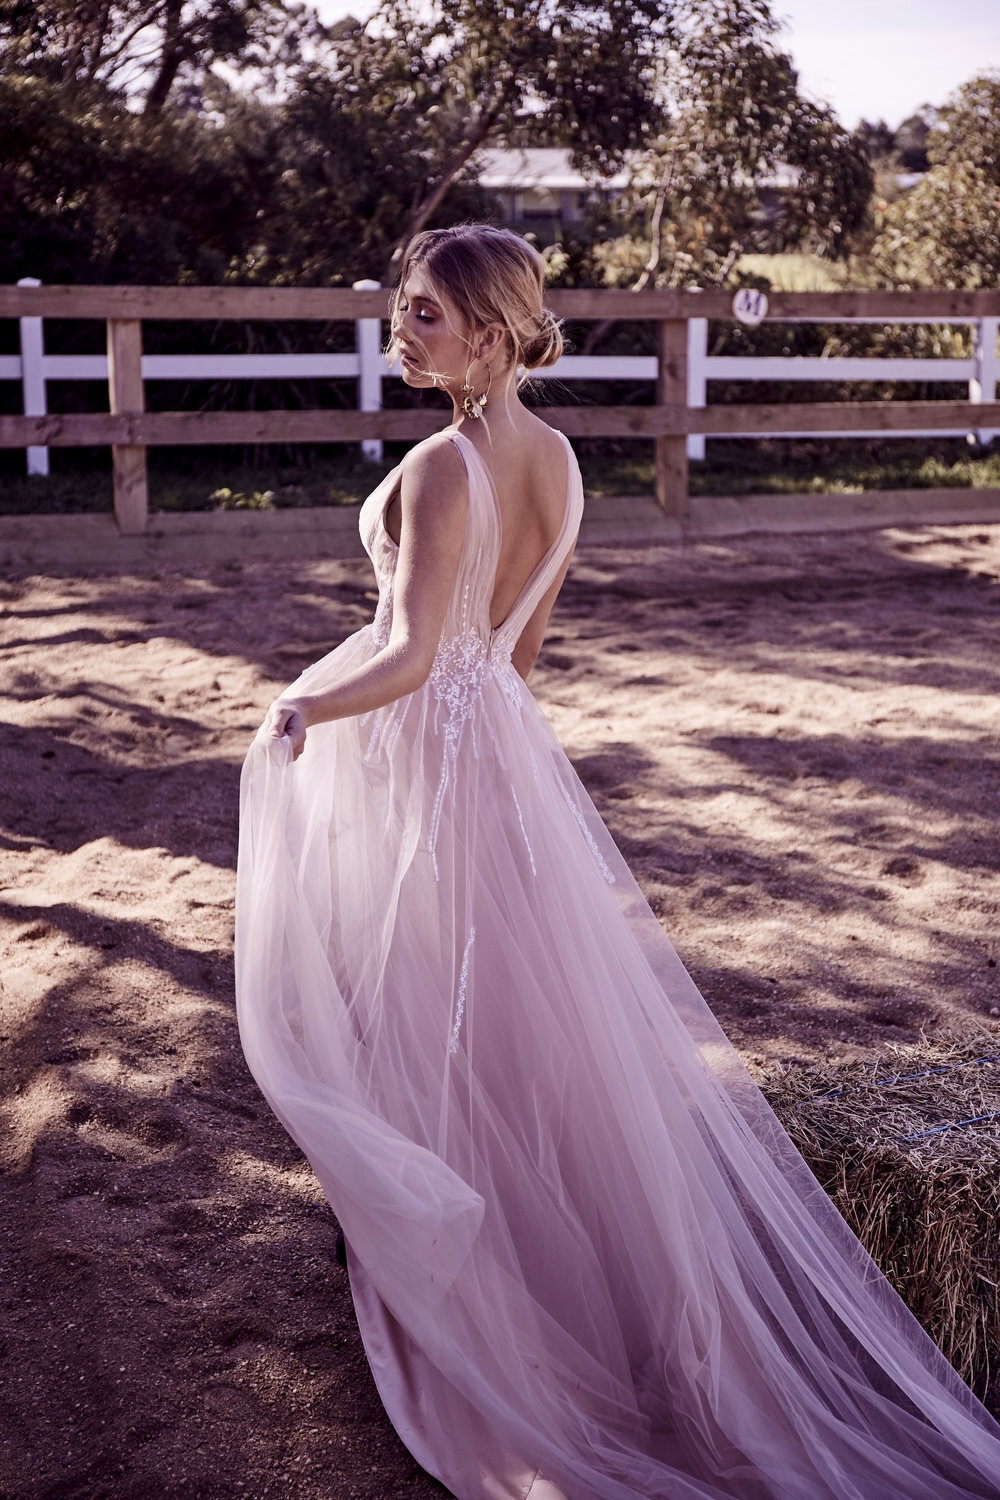 Casey+v+neck+tulle+wedding+dress+blush+pink+sydney+bridal+designer+10_67935.jpeg